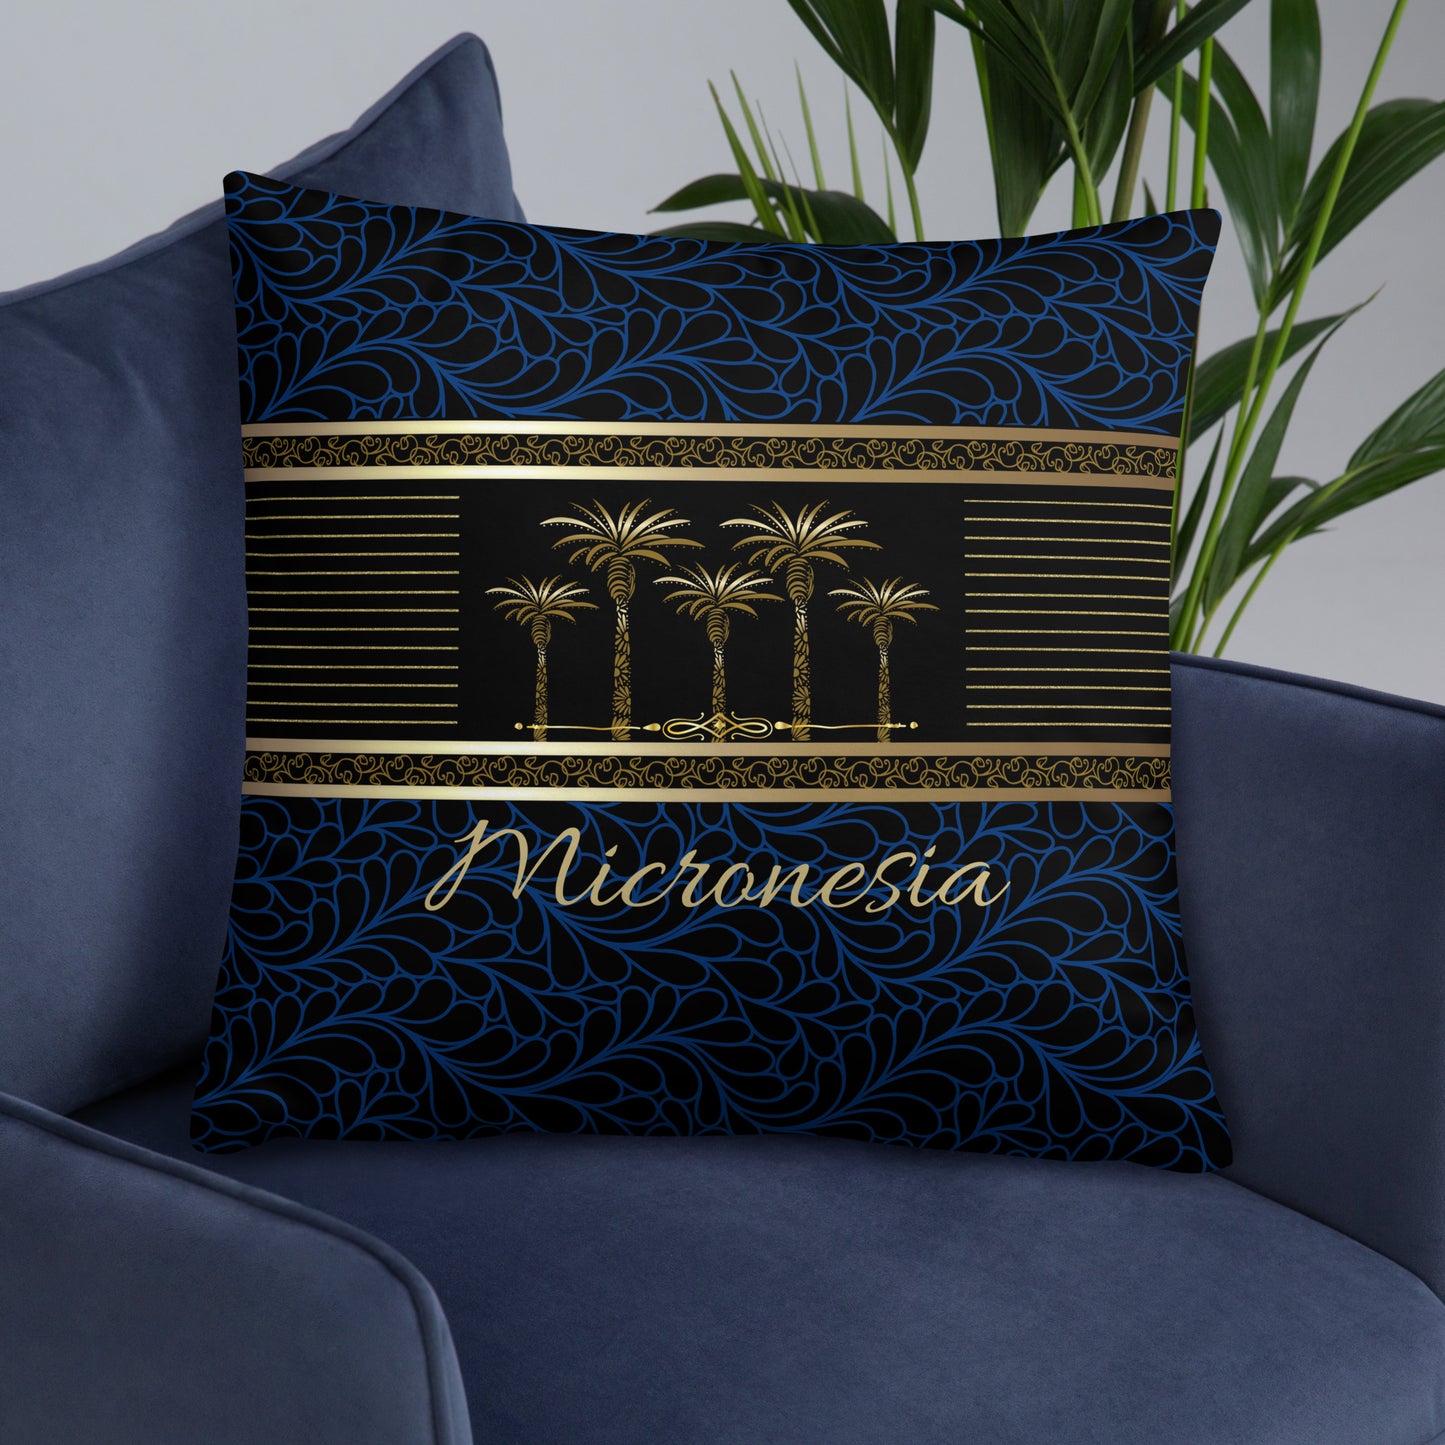 Micronesia Travel Gift | Micronesia Vacation Gift | Micronesia Travel Souvenir | Micronesia Vacation Memento | Micronesia Home Décor | Keepsake Souvenir Gift | Travel Vacation Gift | World Travel Gift Pillow